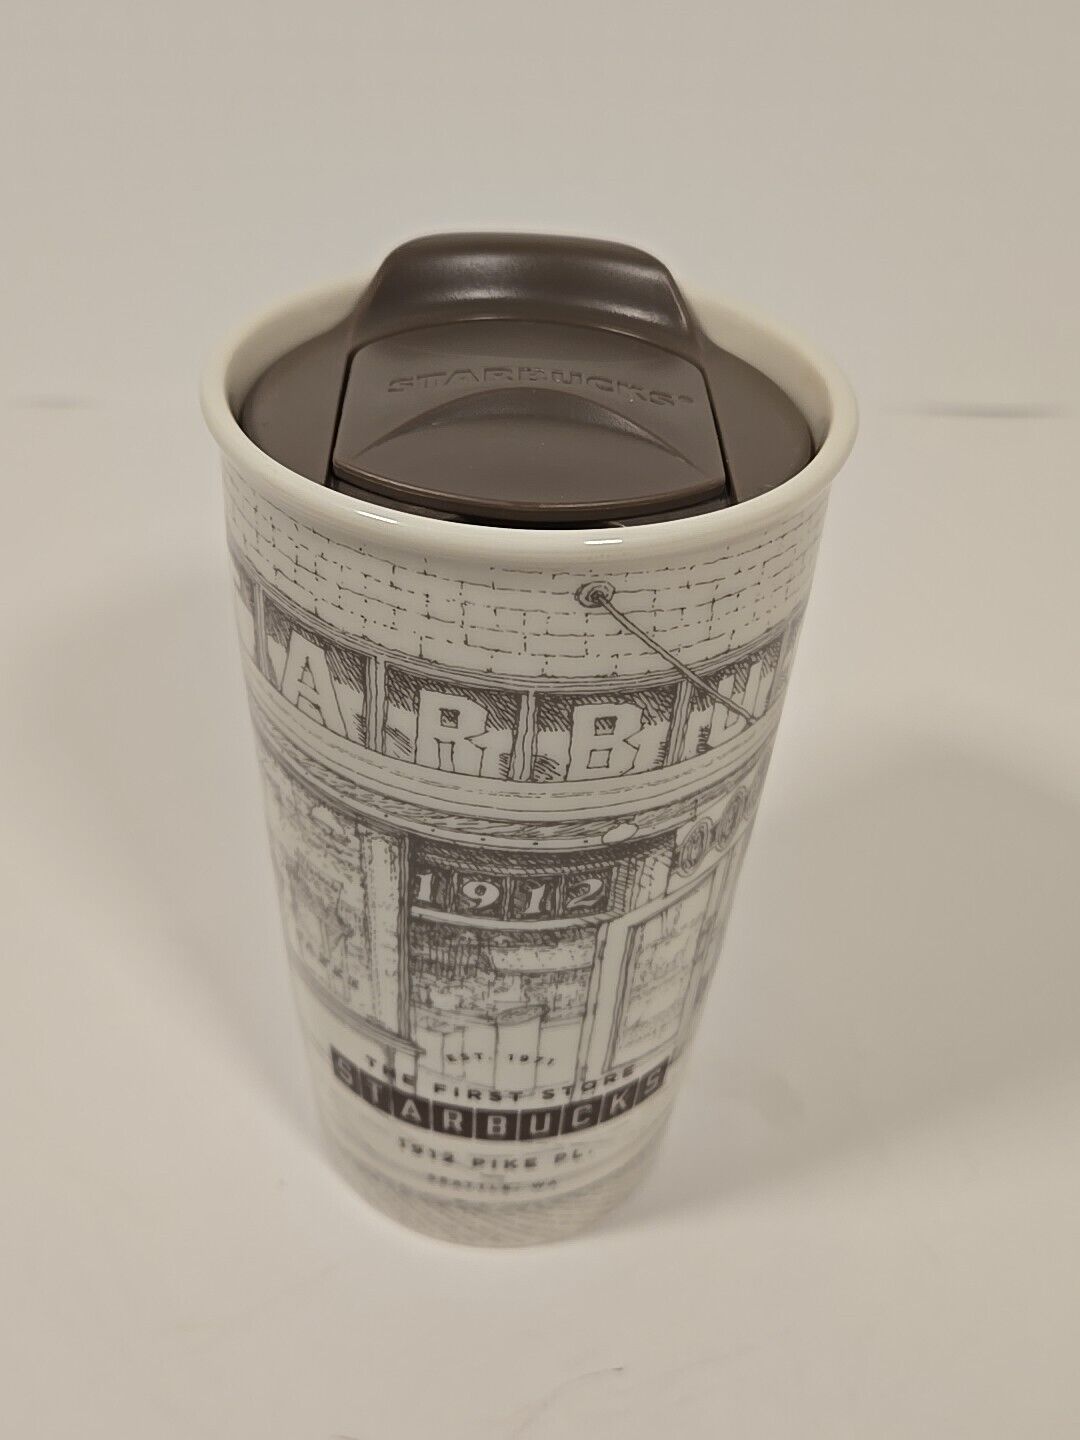 Starbucks 2016 First Store Pike Pl Ceramic China Travel Mug Tumbler Lid 12oz